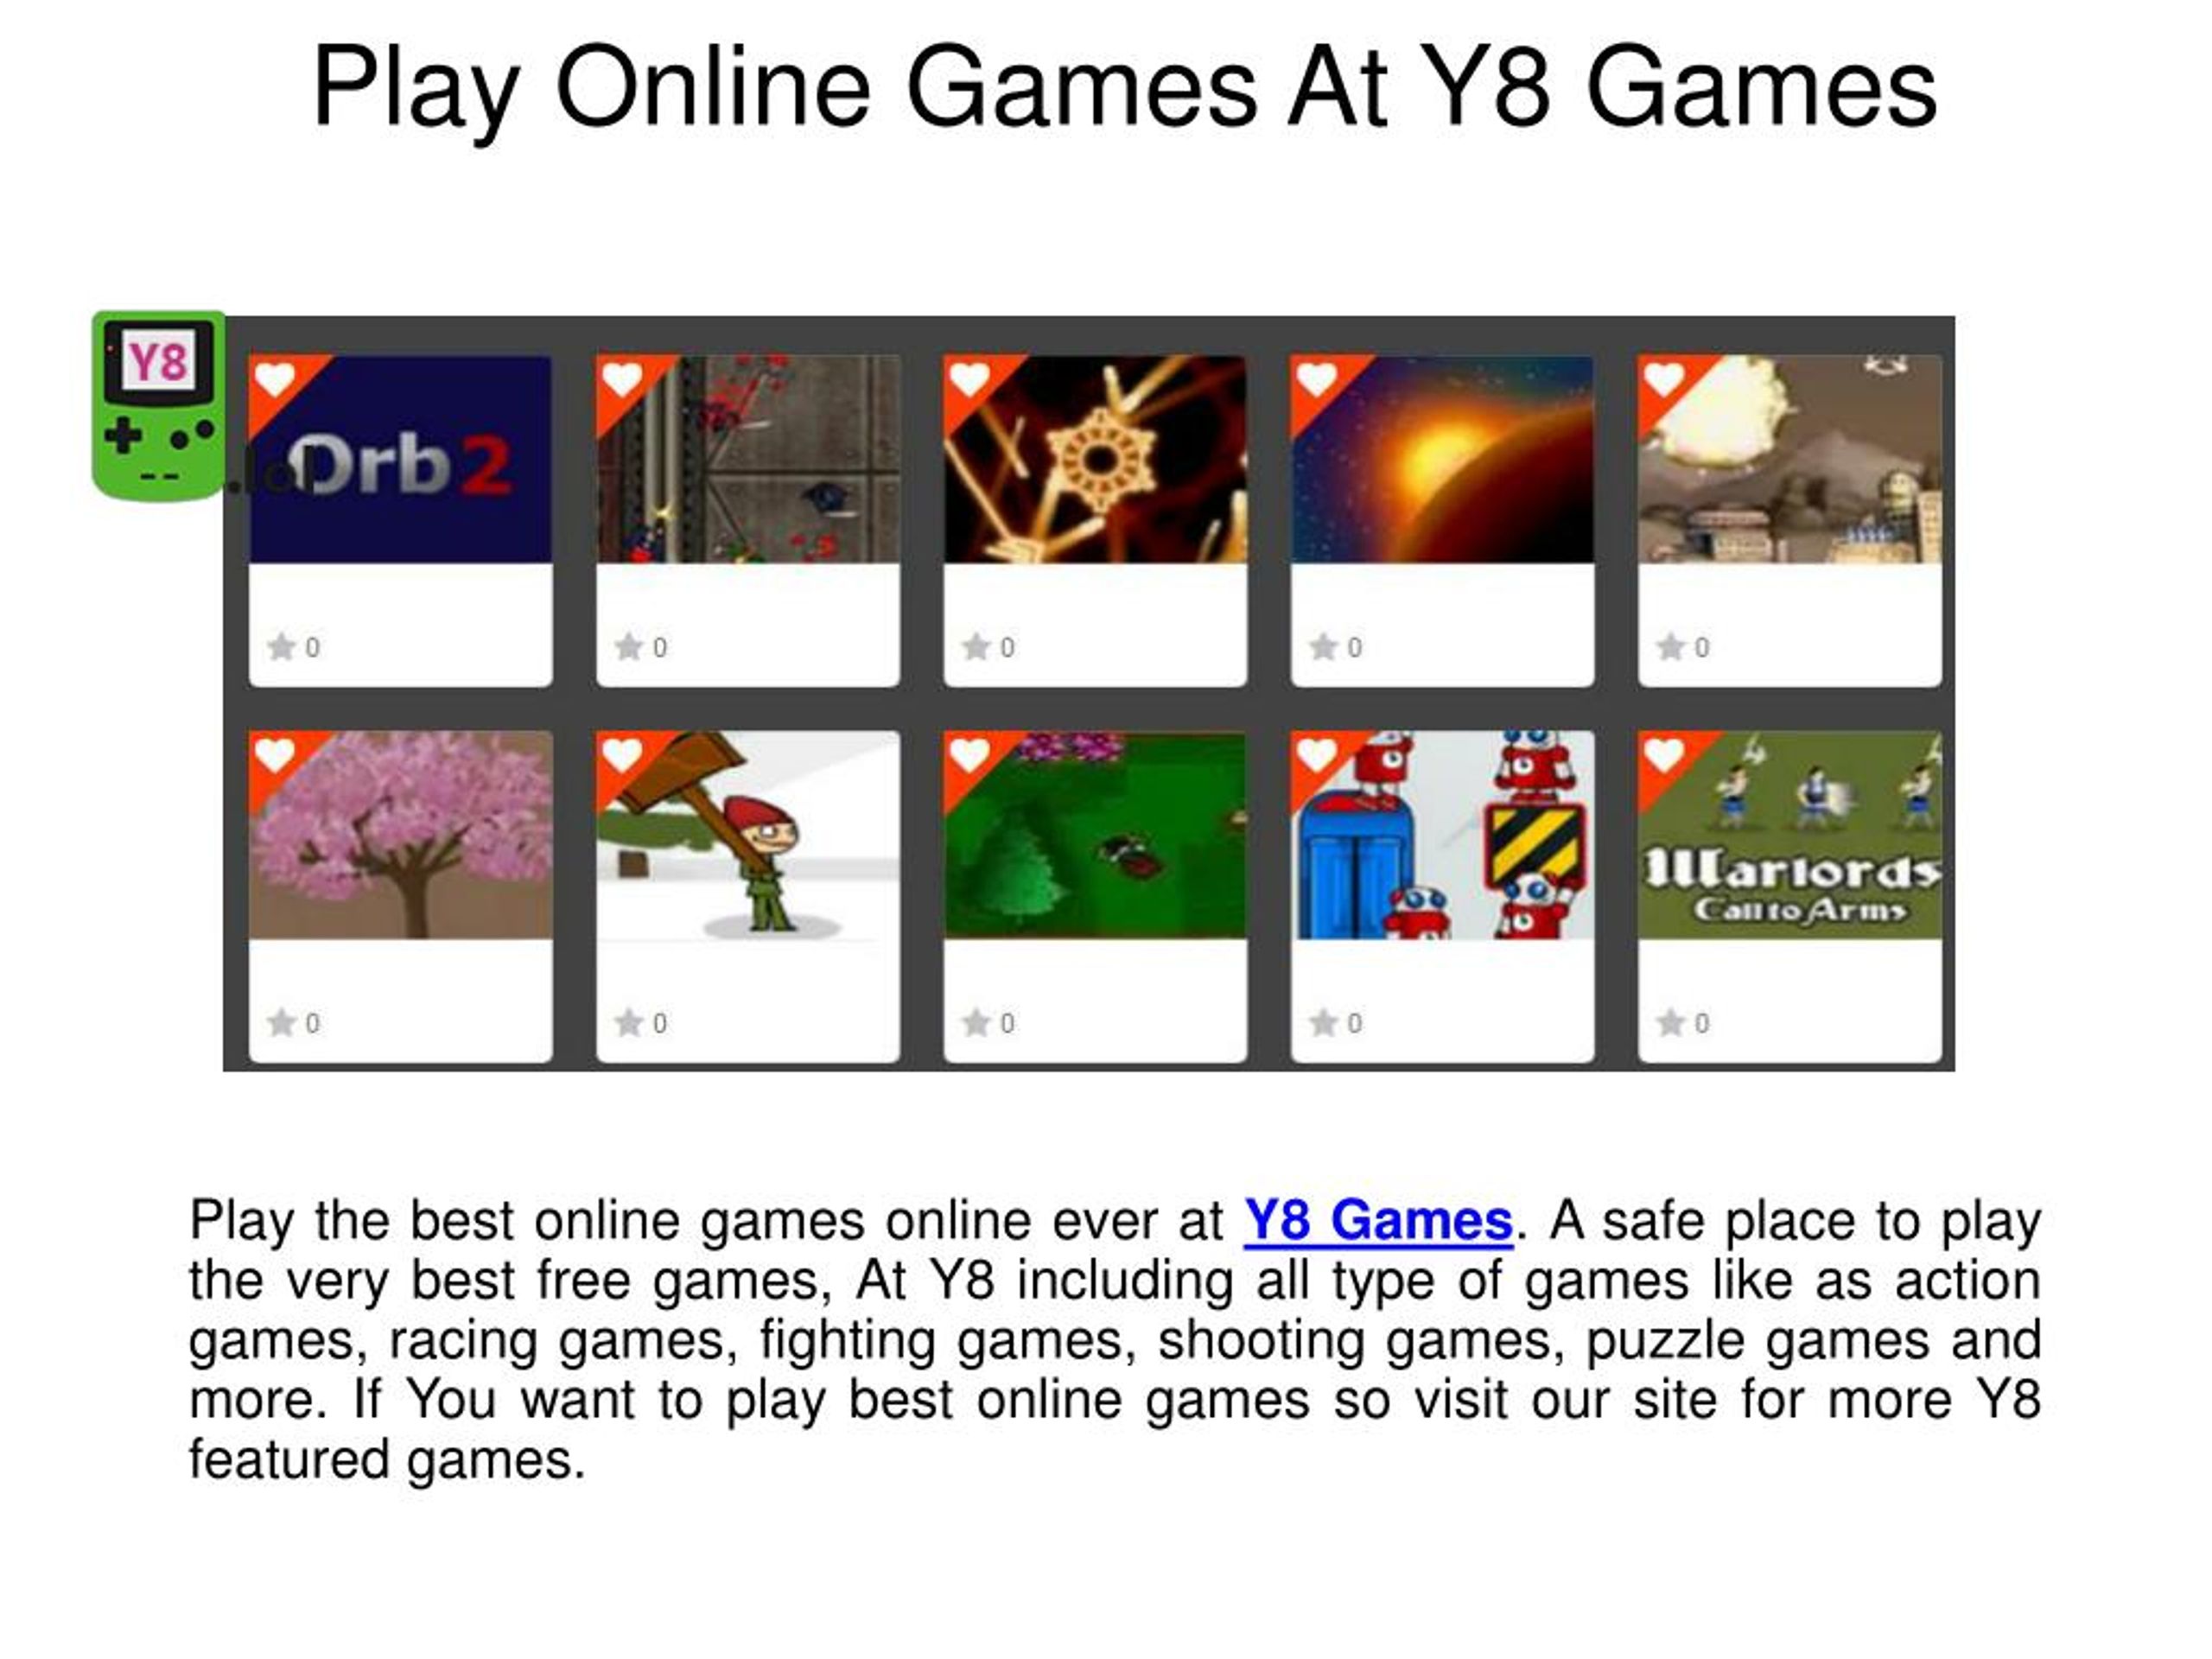 Y8 Games - Play Online Games